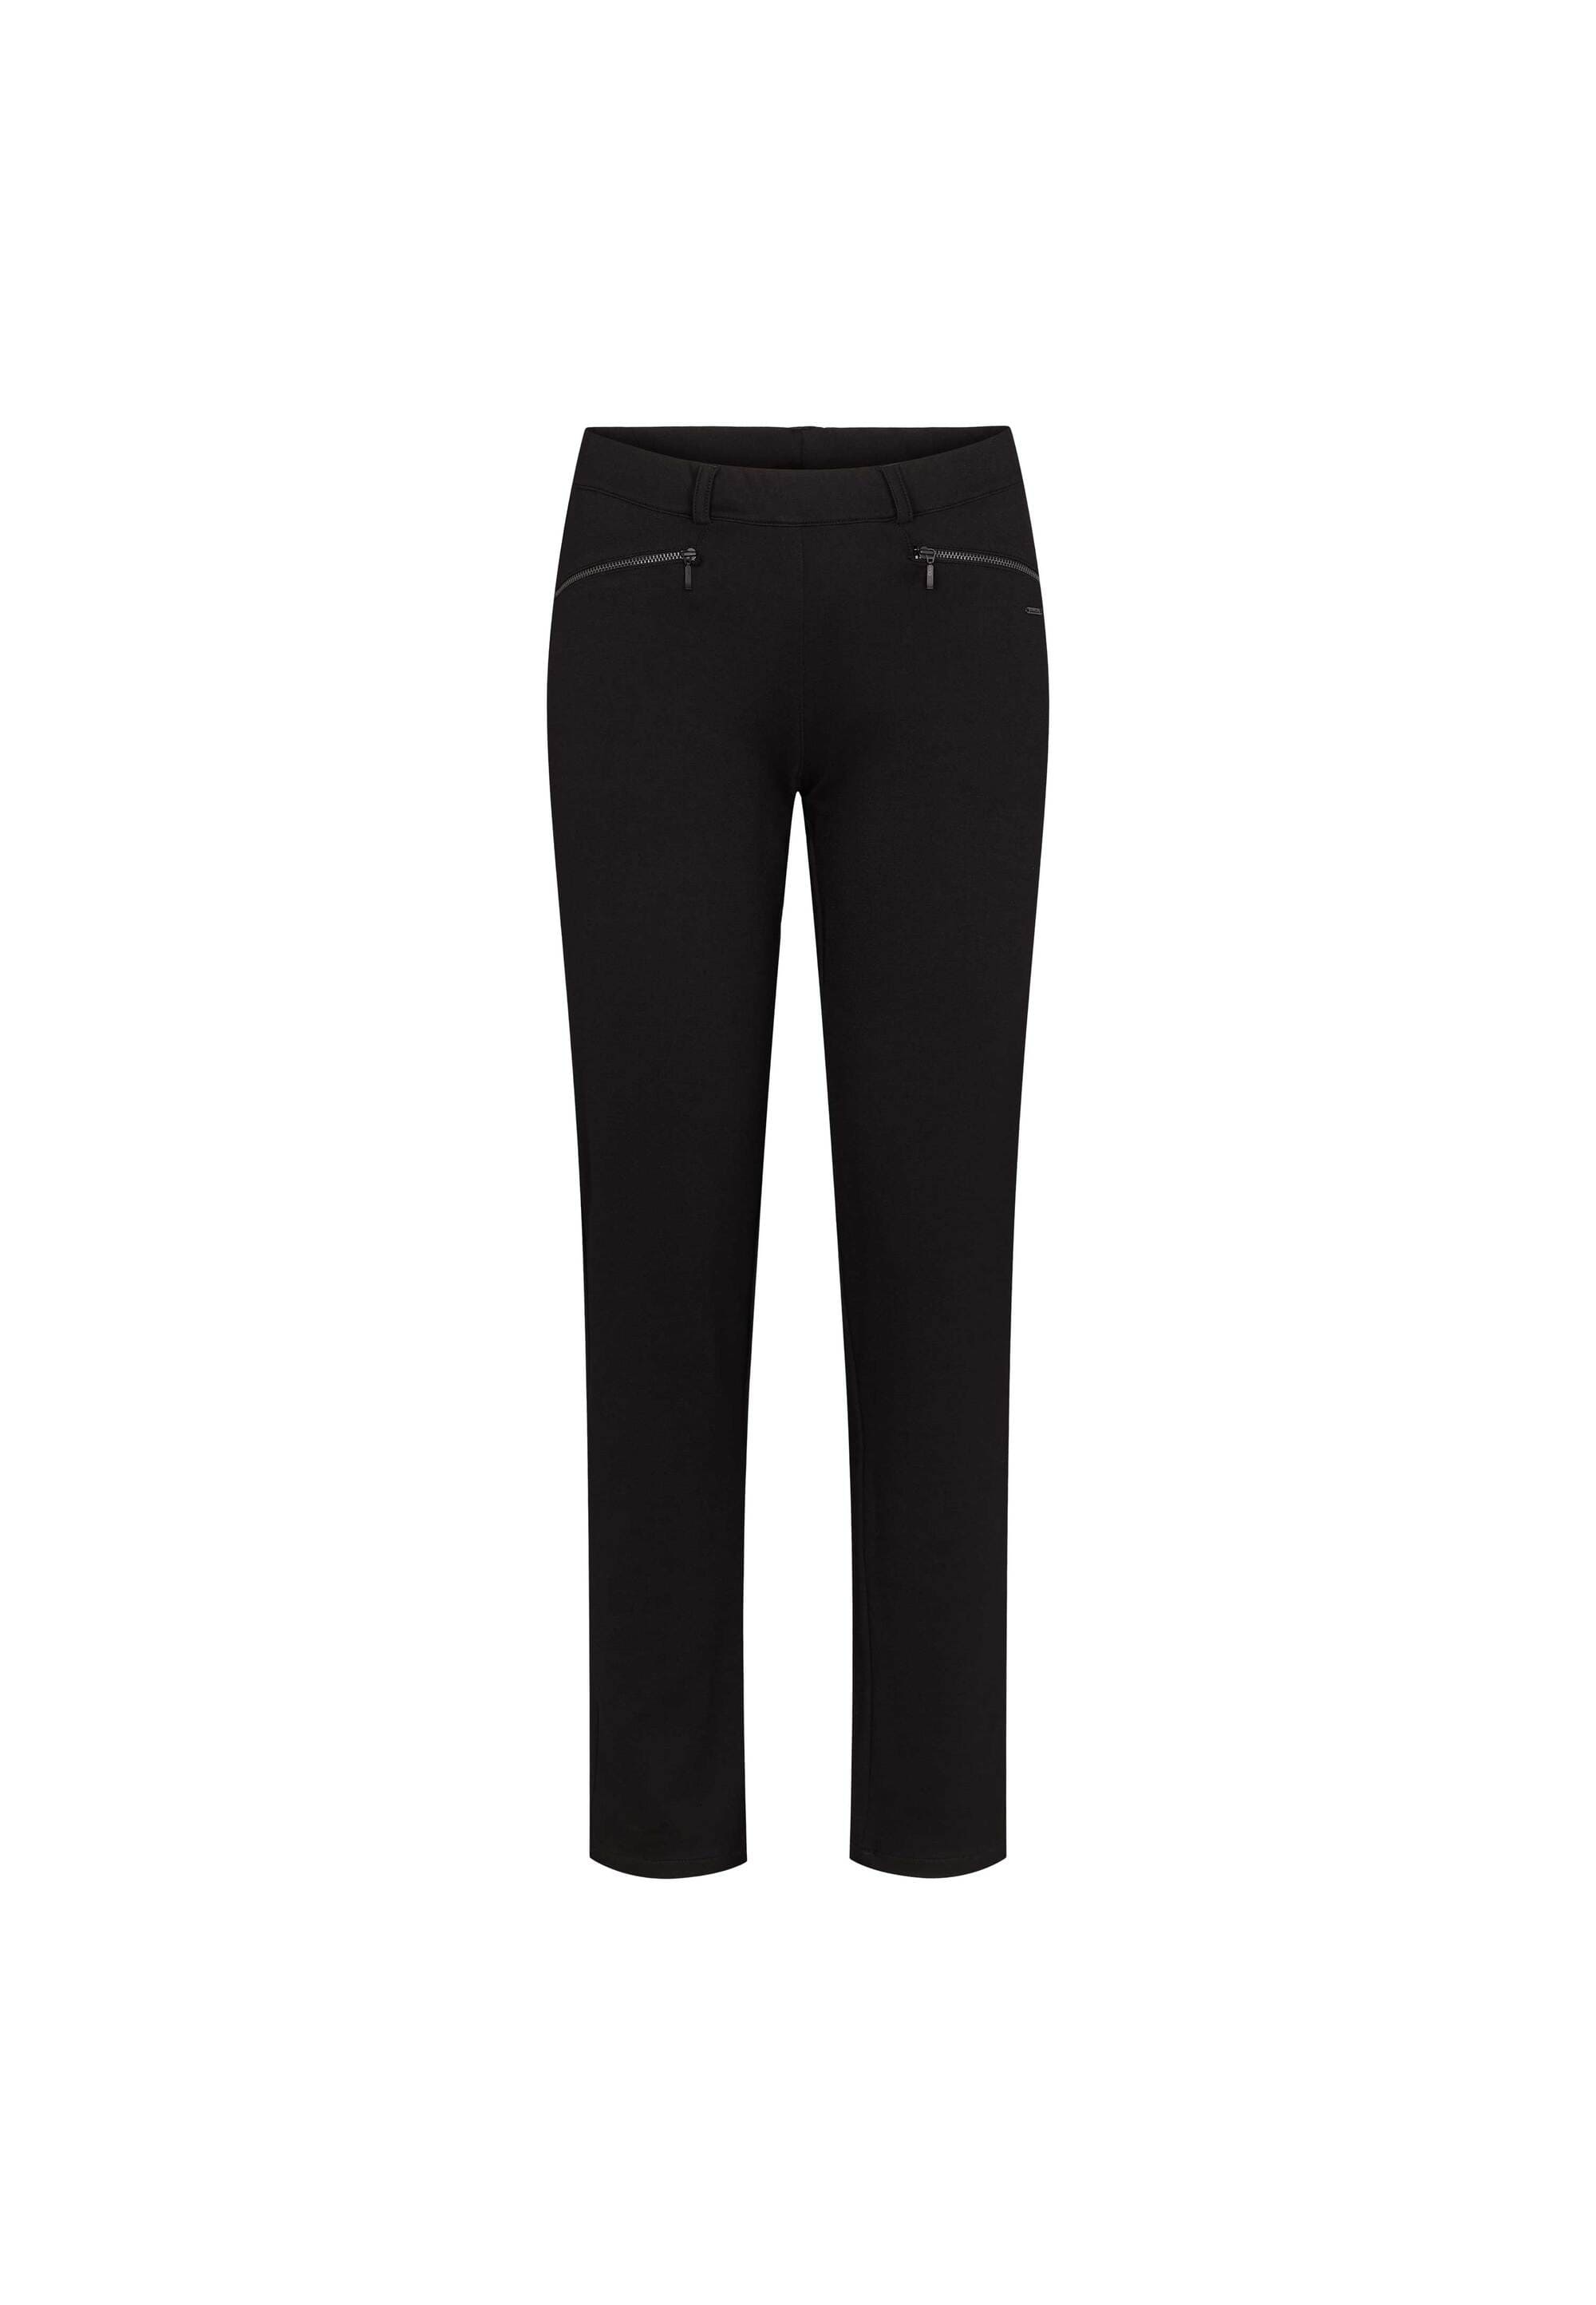 LAURIE Rylie Regular - Short Length Trousers REGULAR 99143 Black brushed